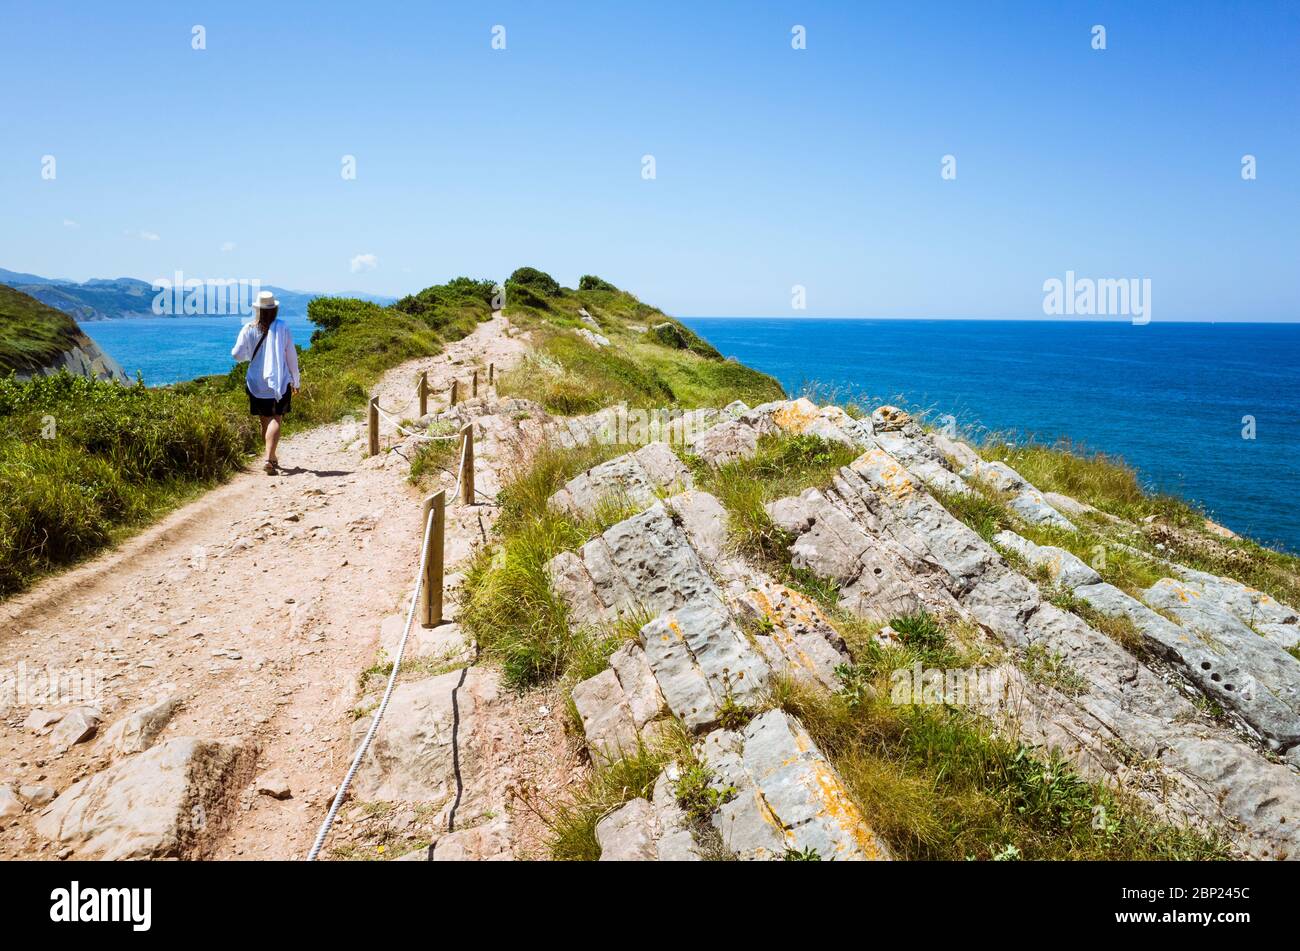 Zumaia, Gipuzkoa, Basque Country, Spain - July 15th, 2019 : A woman walks along the cliff made of flysch rock. Stock Photo